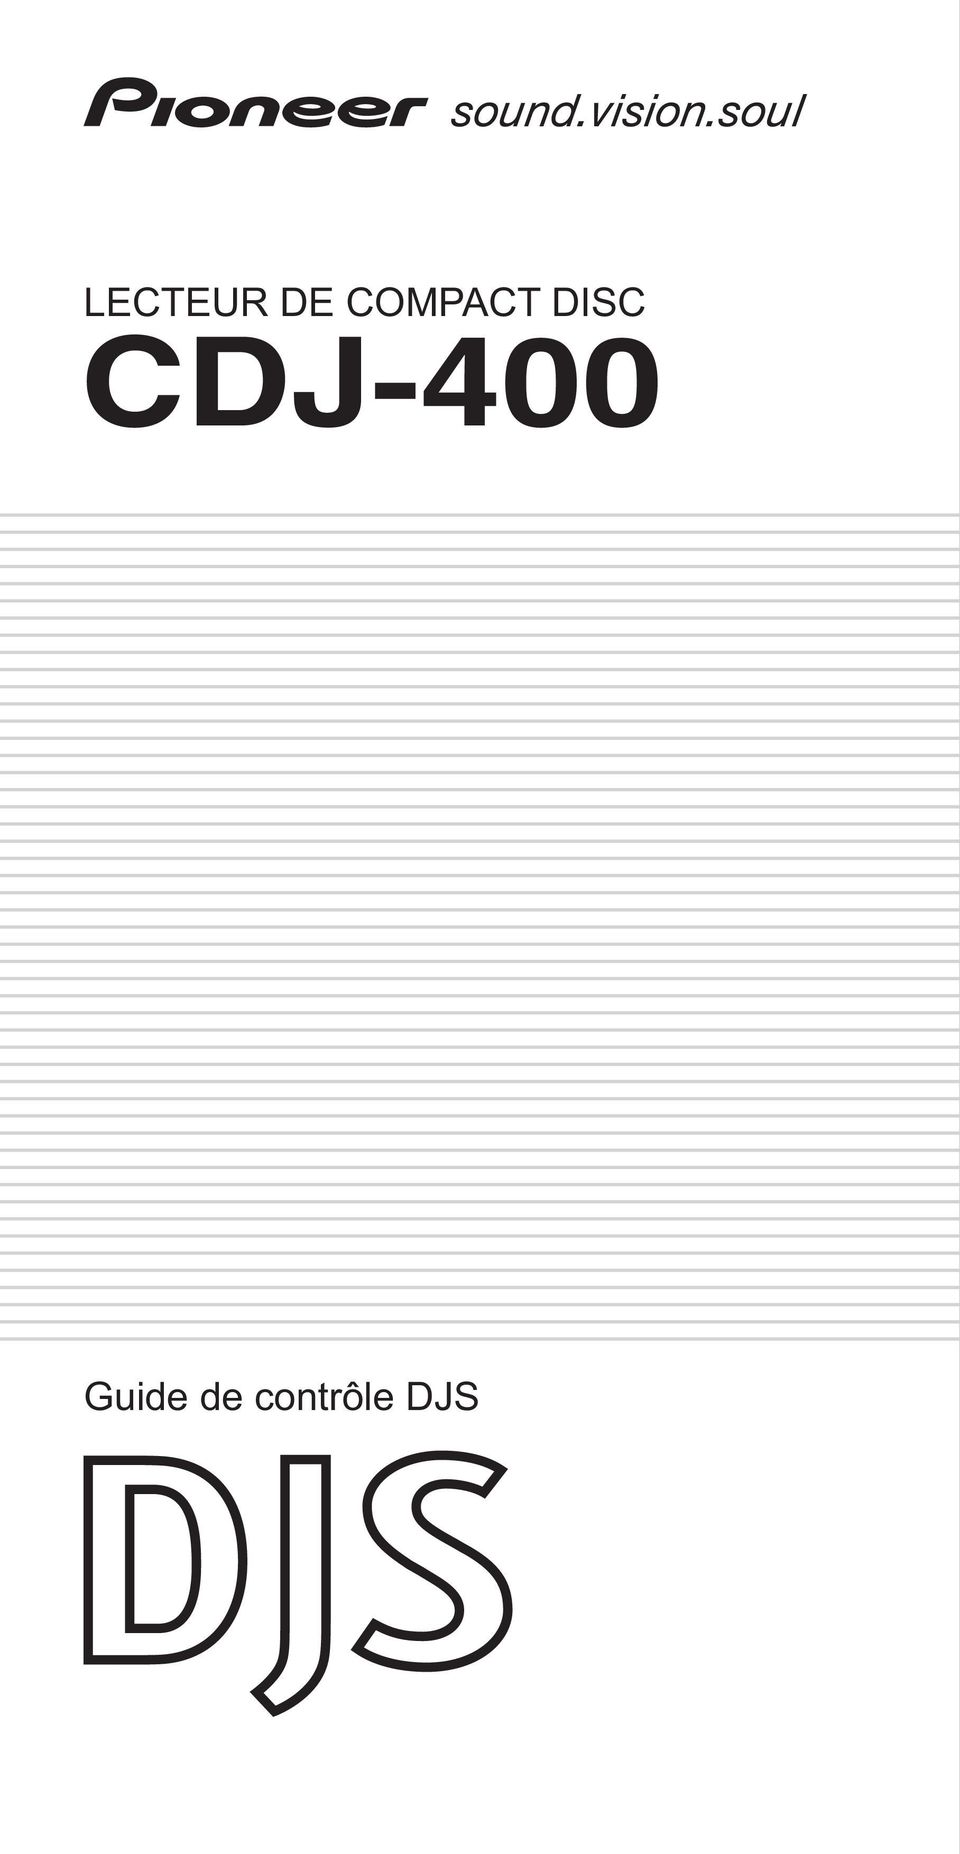 CDJ-400 Guide